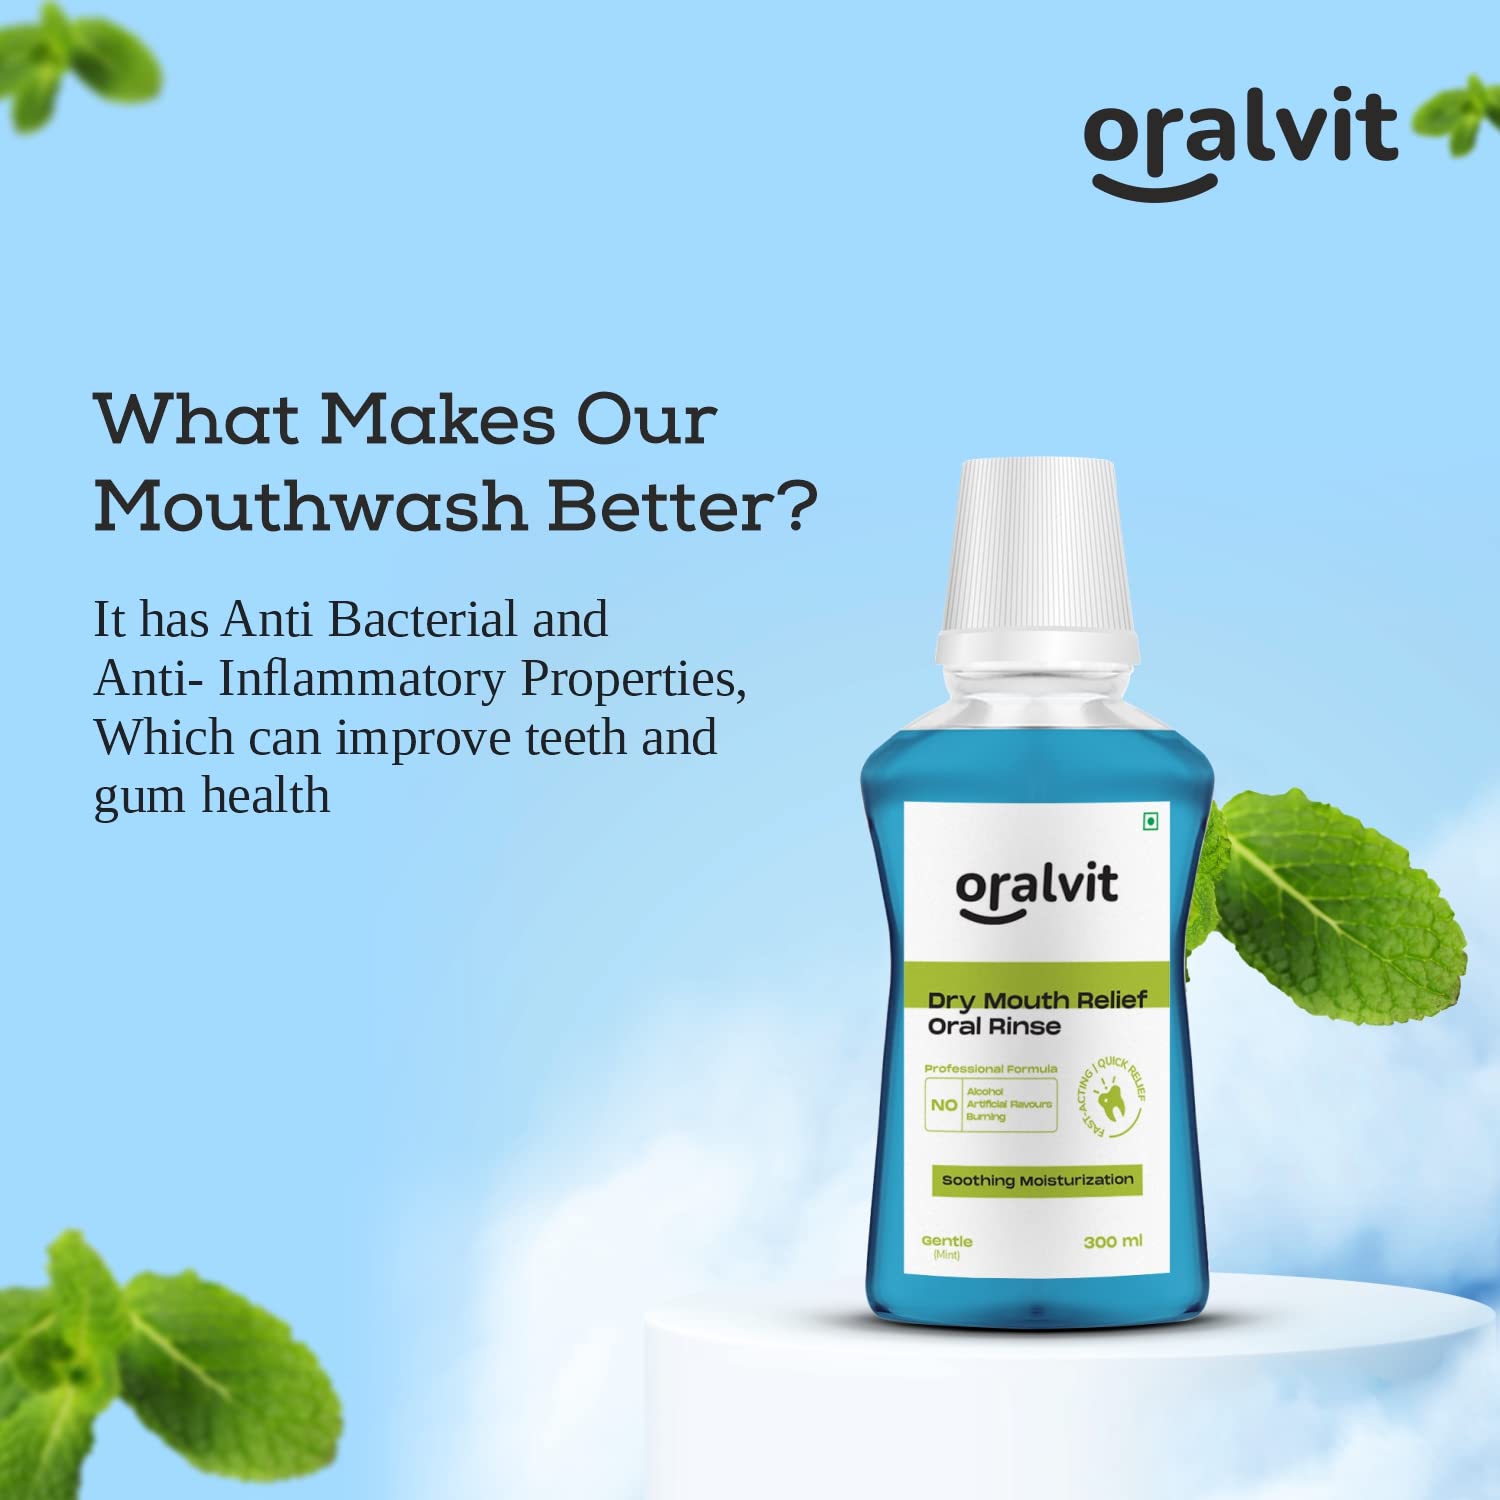 Oralvit Oral Rinse Dry Mouthwash | Prevents Bad Breath | Alcohol-Free, No Burning Sensation, No Artificial Flavour 300ml - Mint Flavour (Pack of 4)